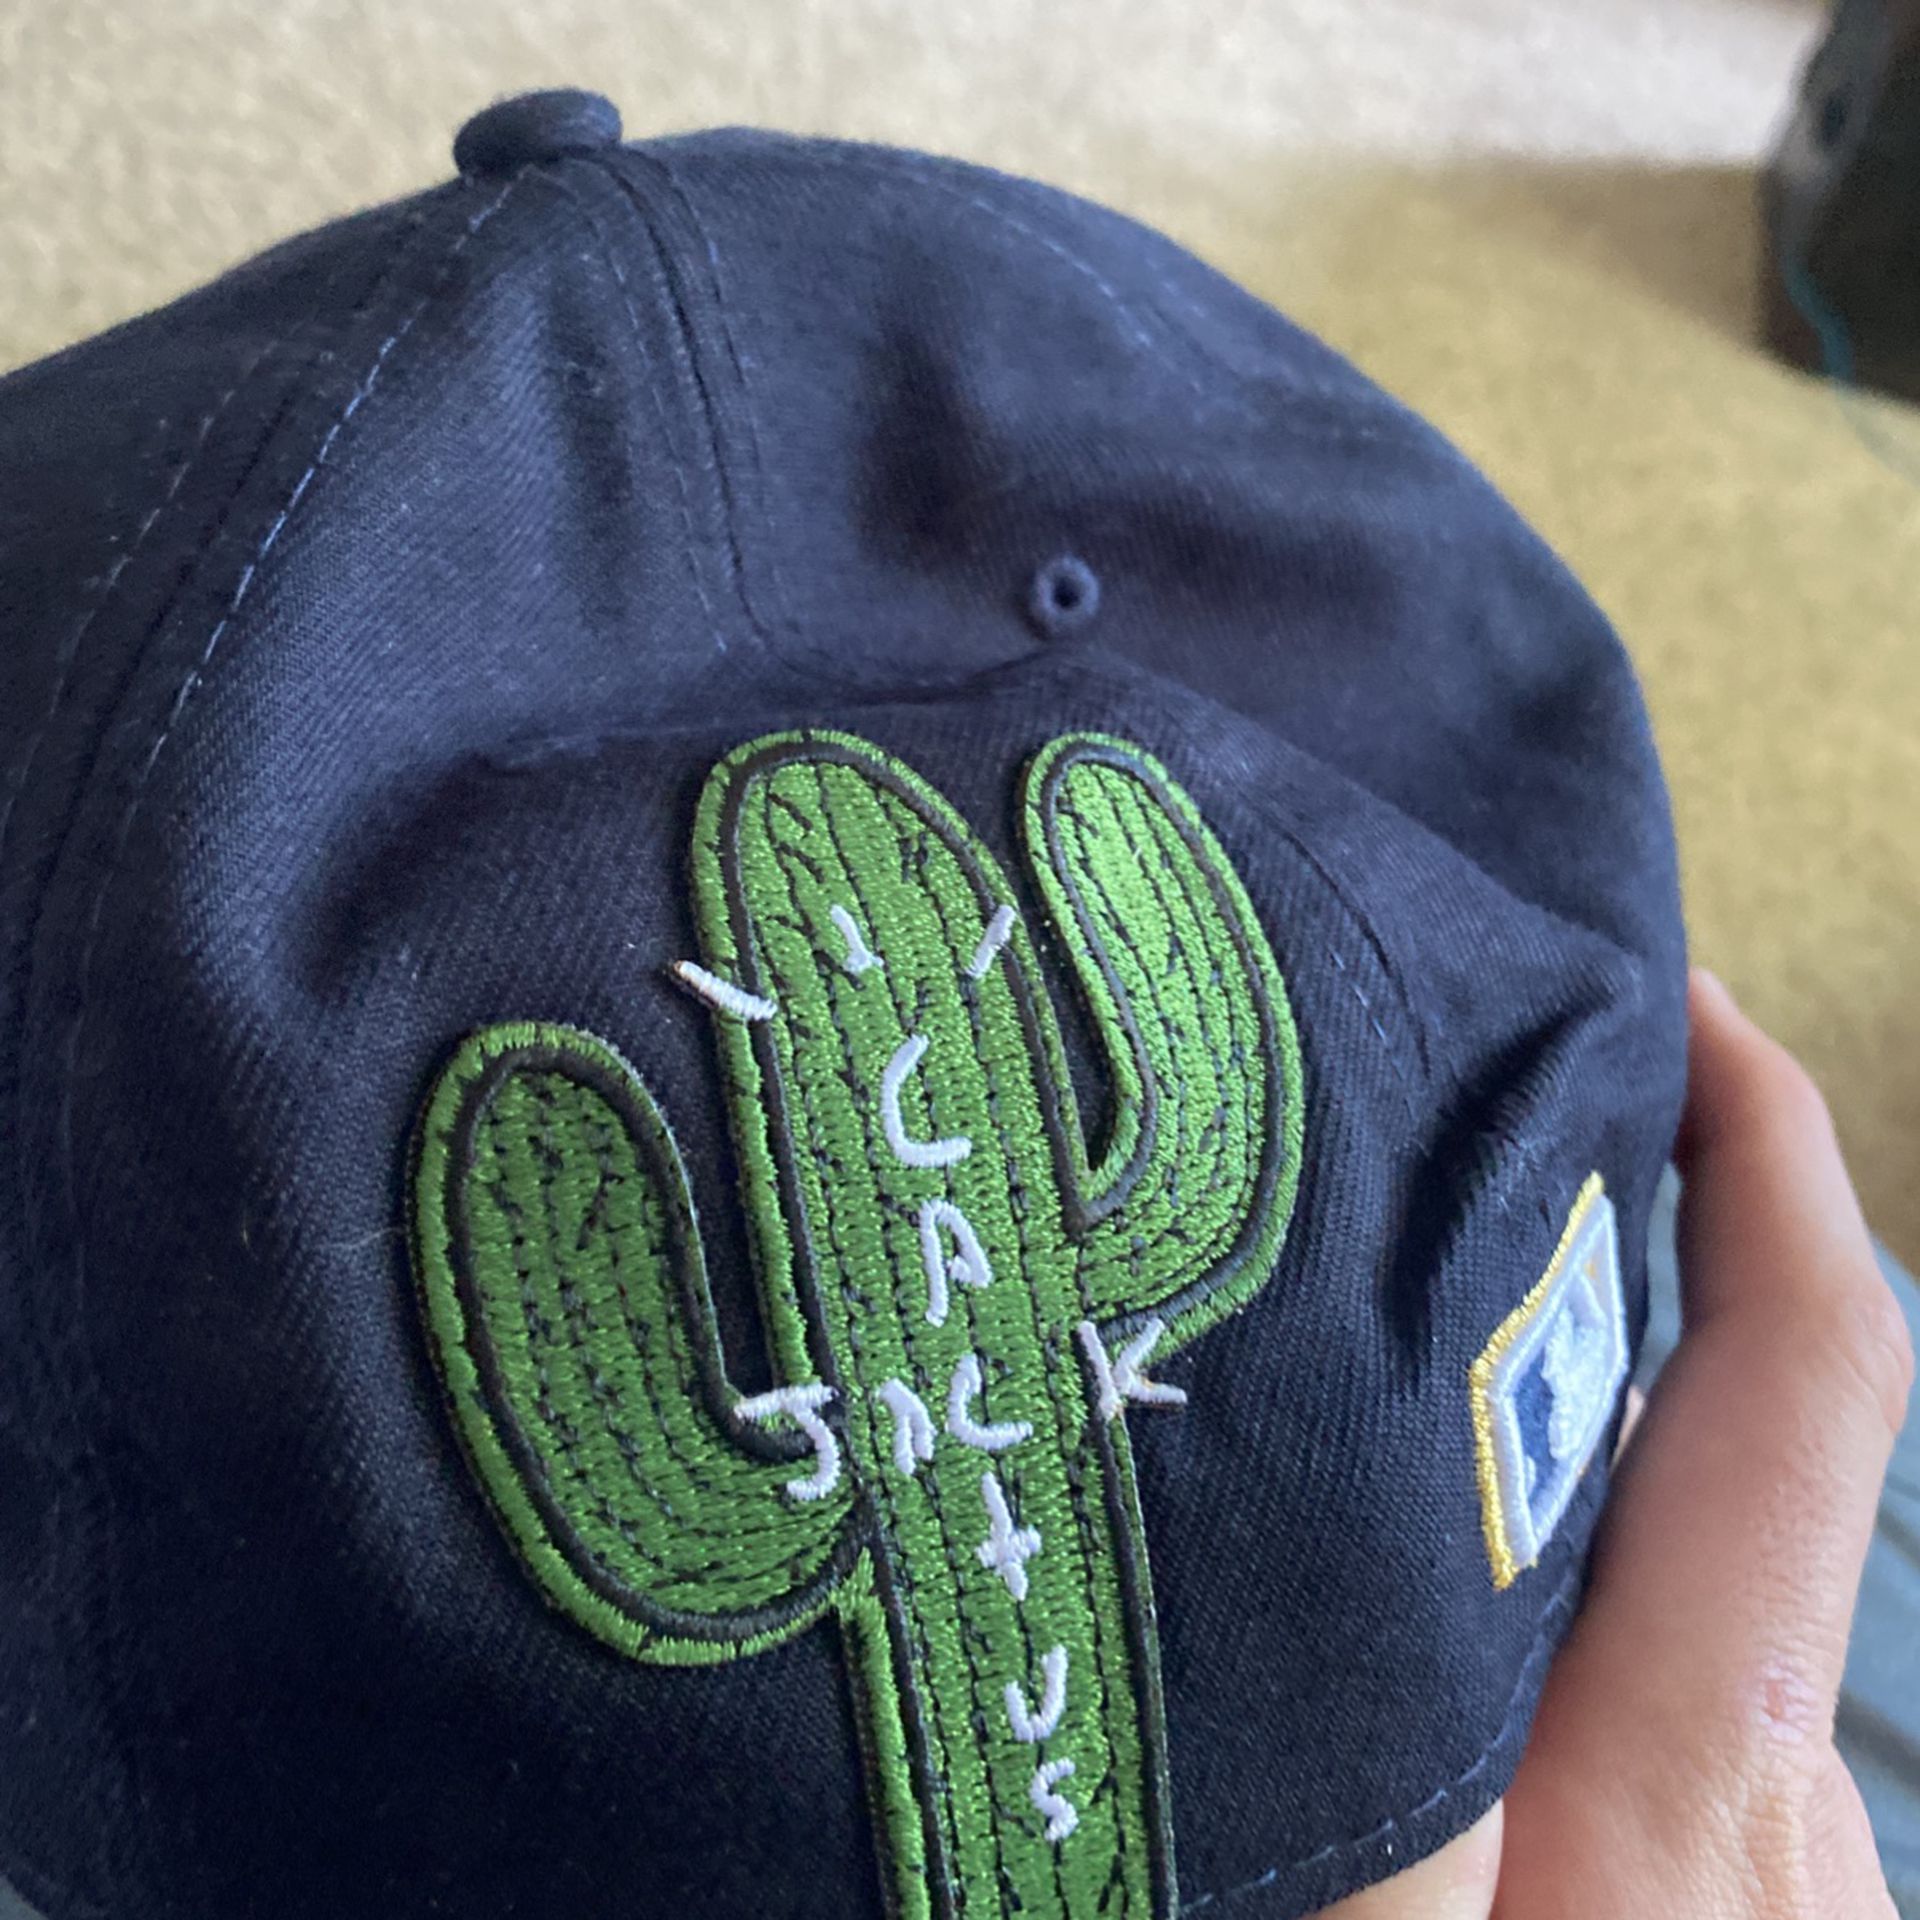 Astros Jersey & Hat- Kids for Sale in Houston, TX - OfferUp